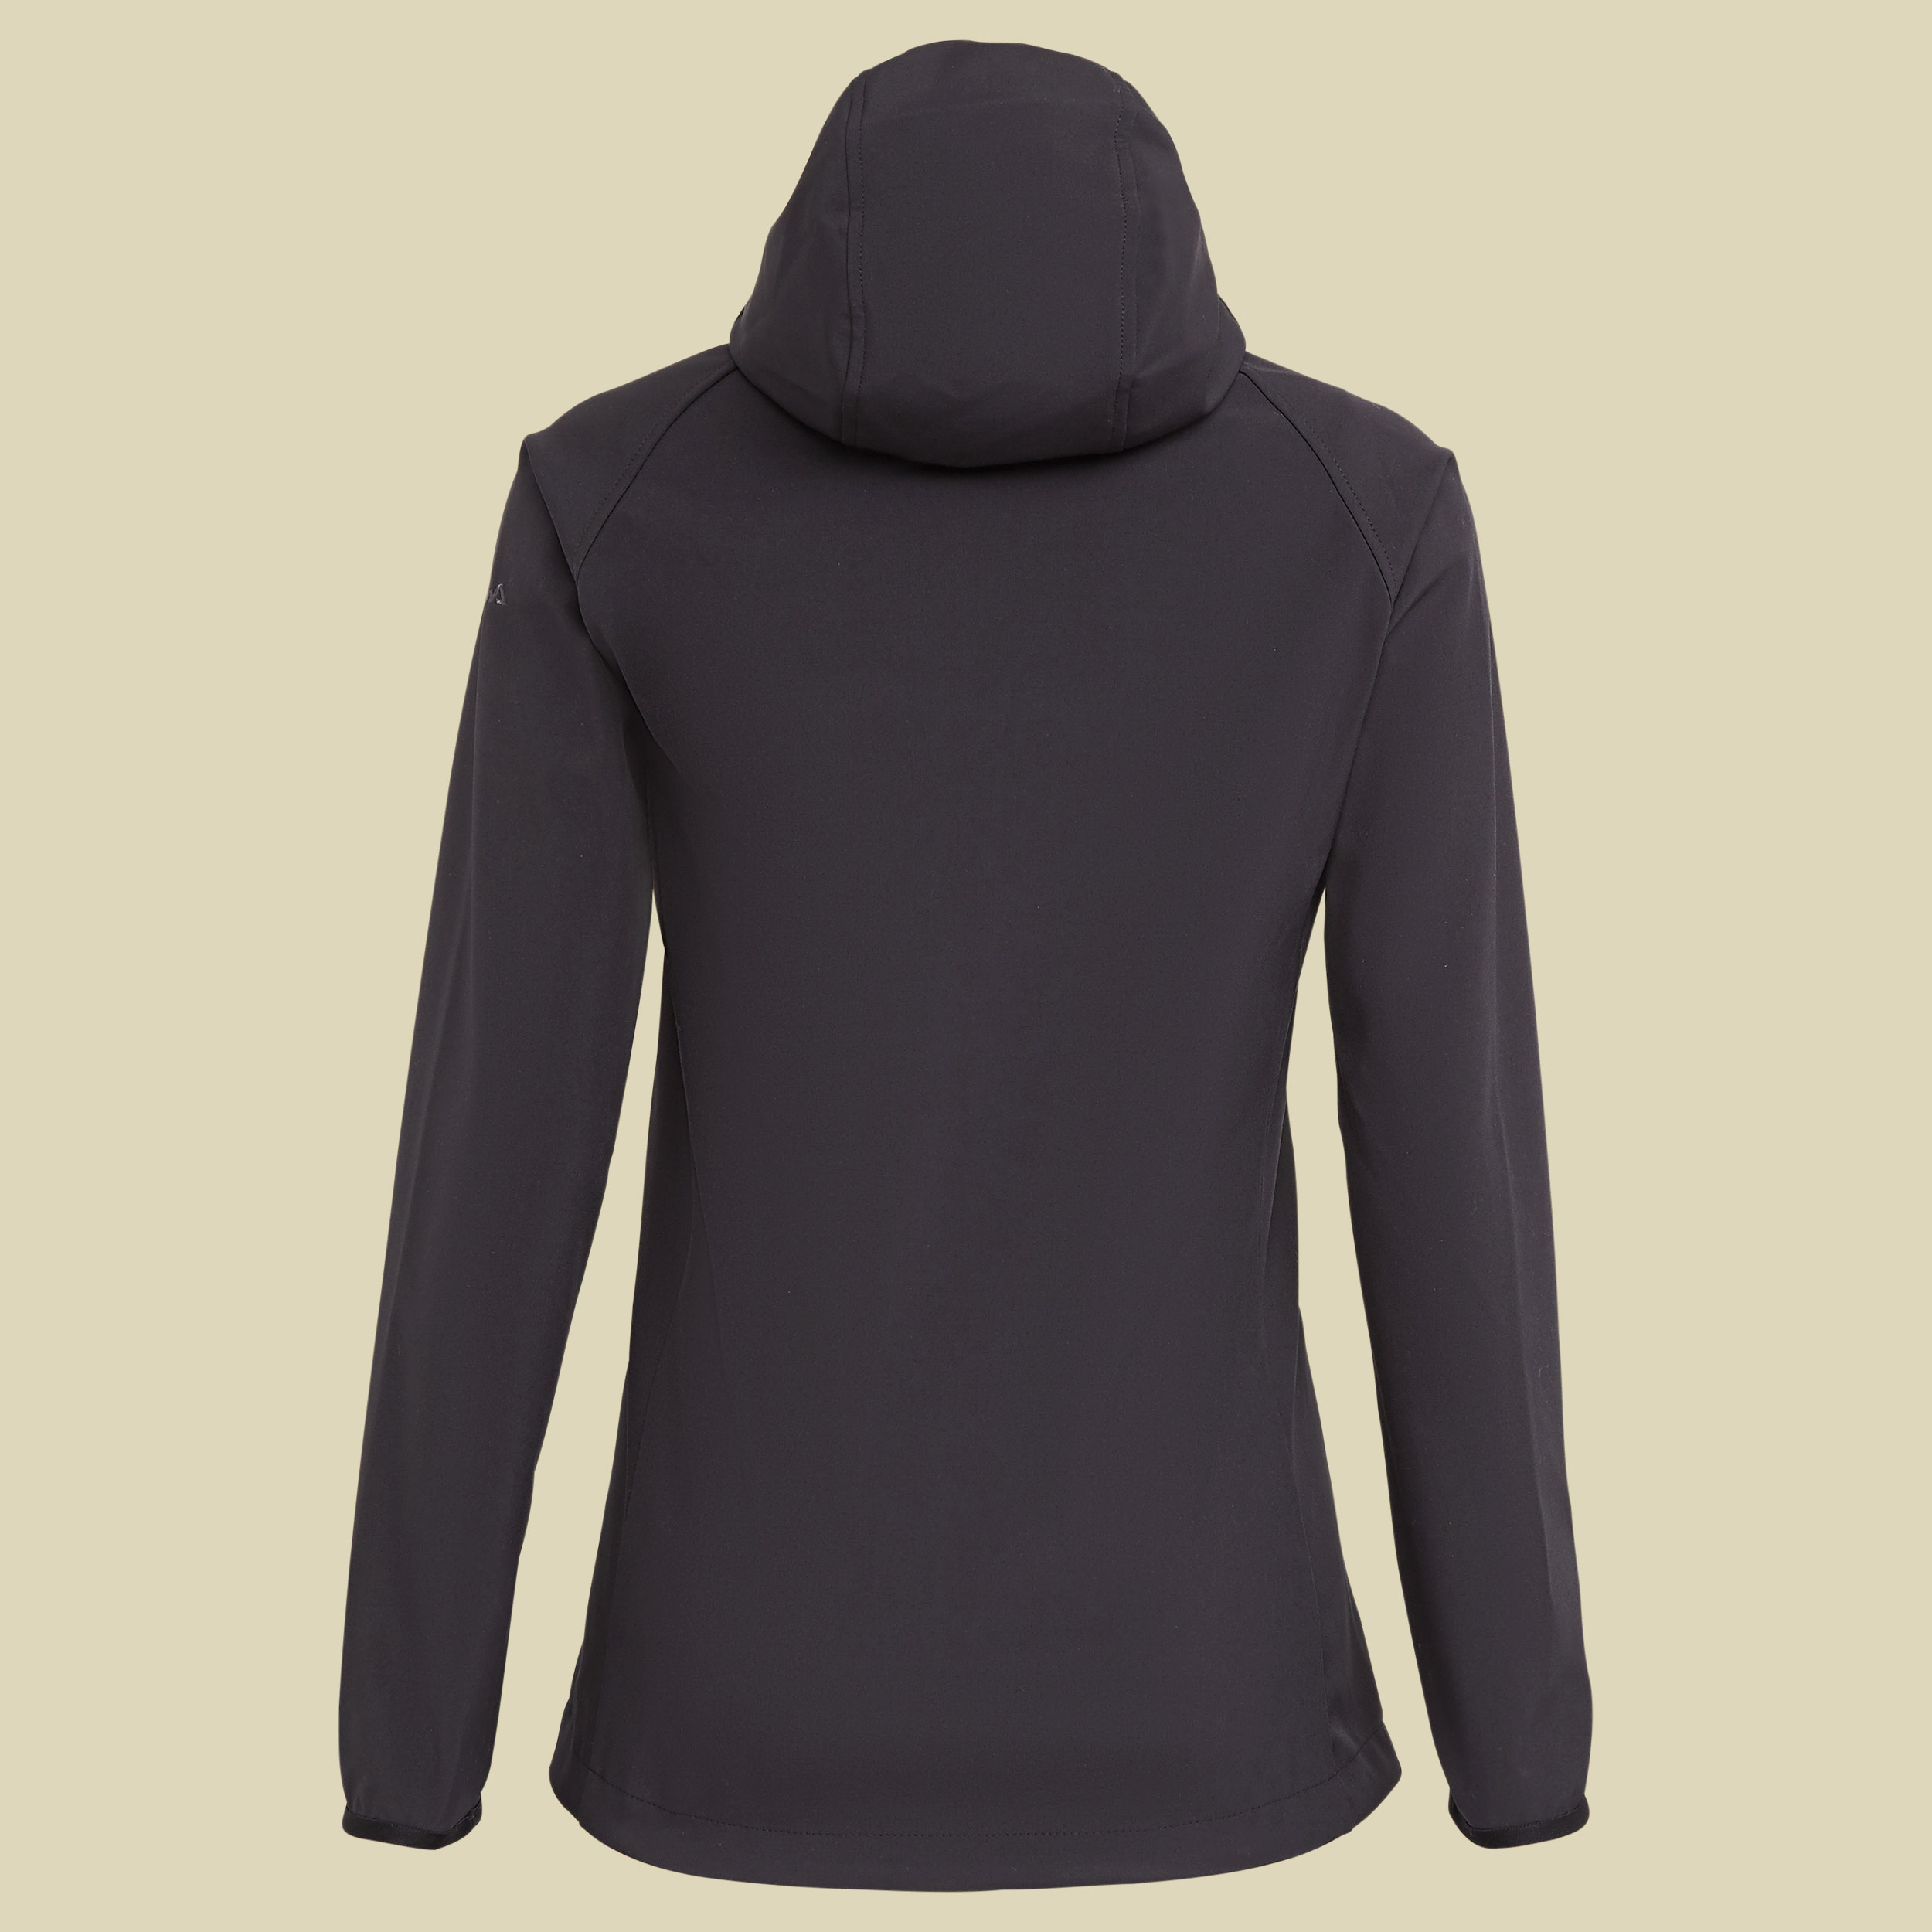 Cesana 2 Stormwall Softshell Jacket Women Größe 42 Farbe black out